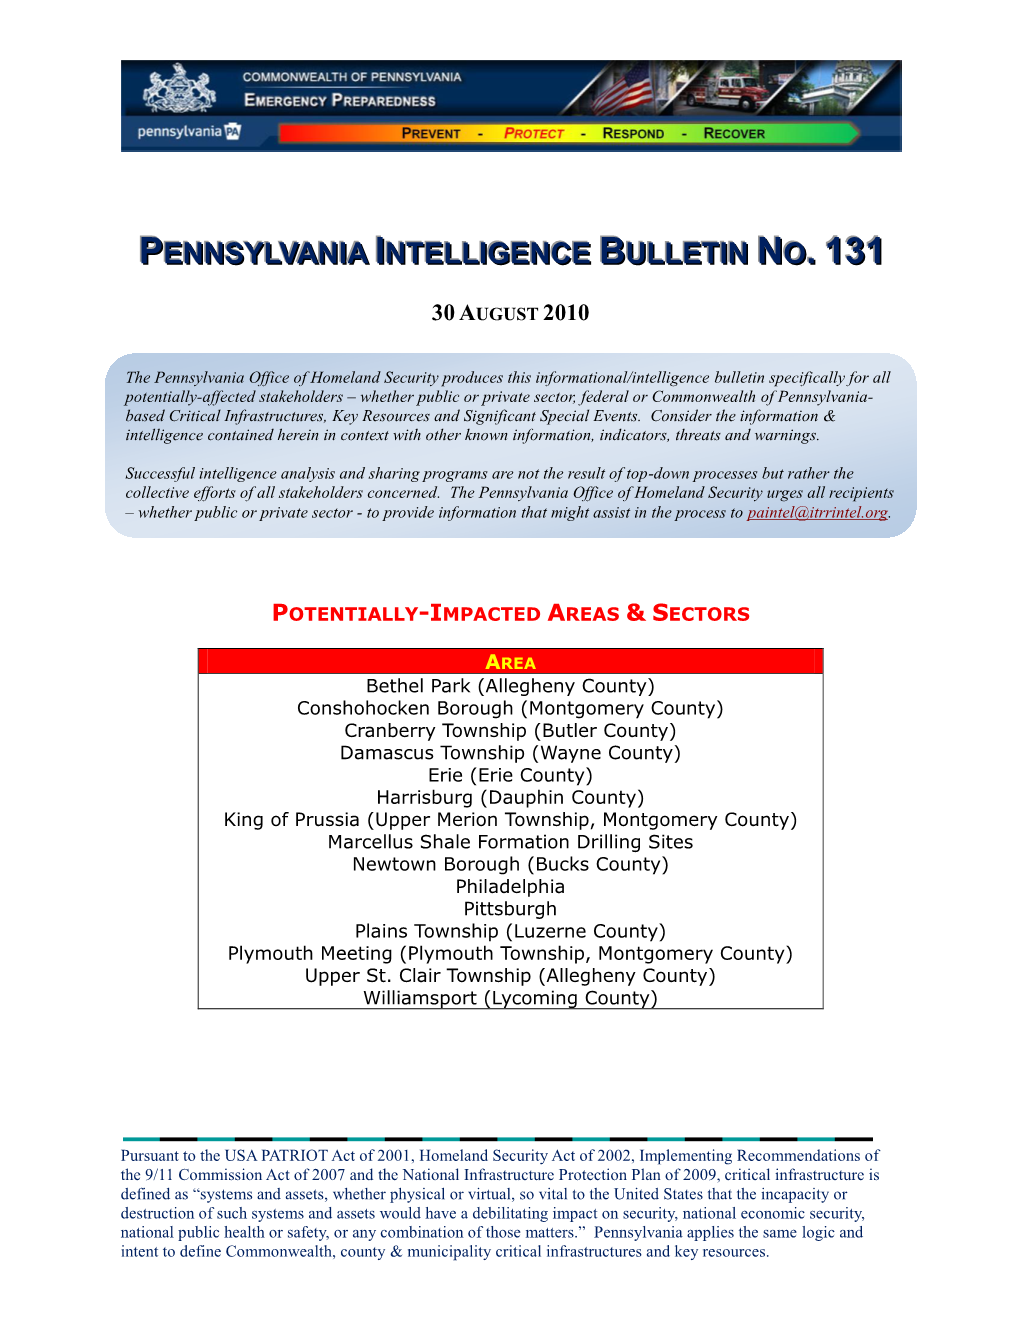 Pennsylvania Intelligence Bulletin No. 130, 27 August 2010